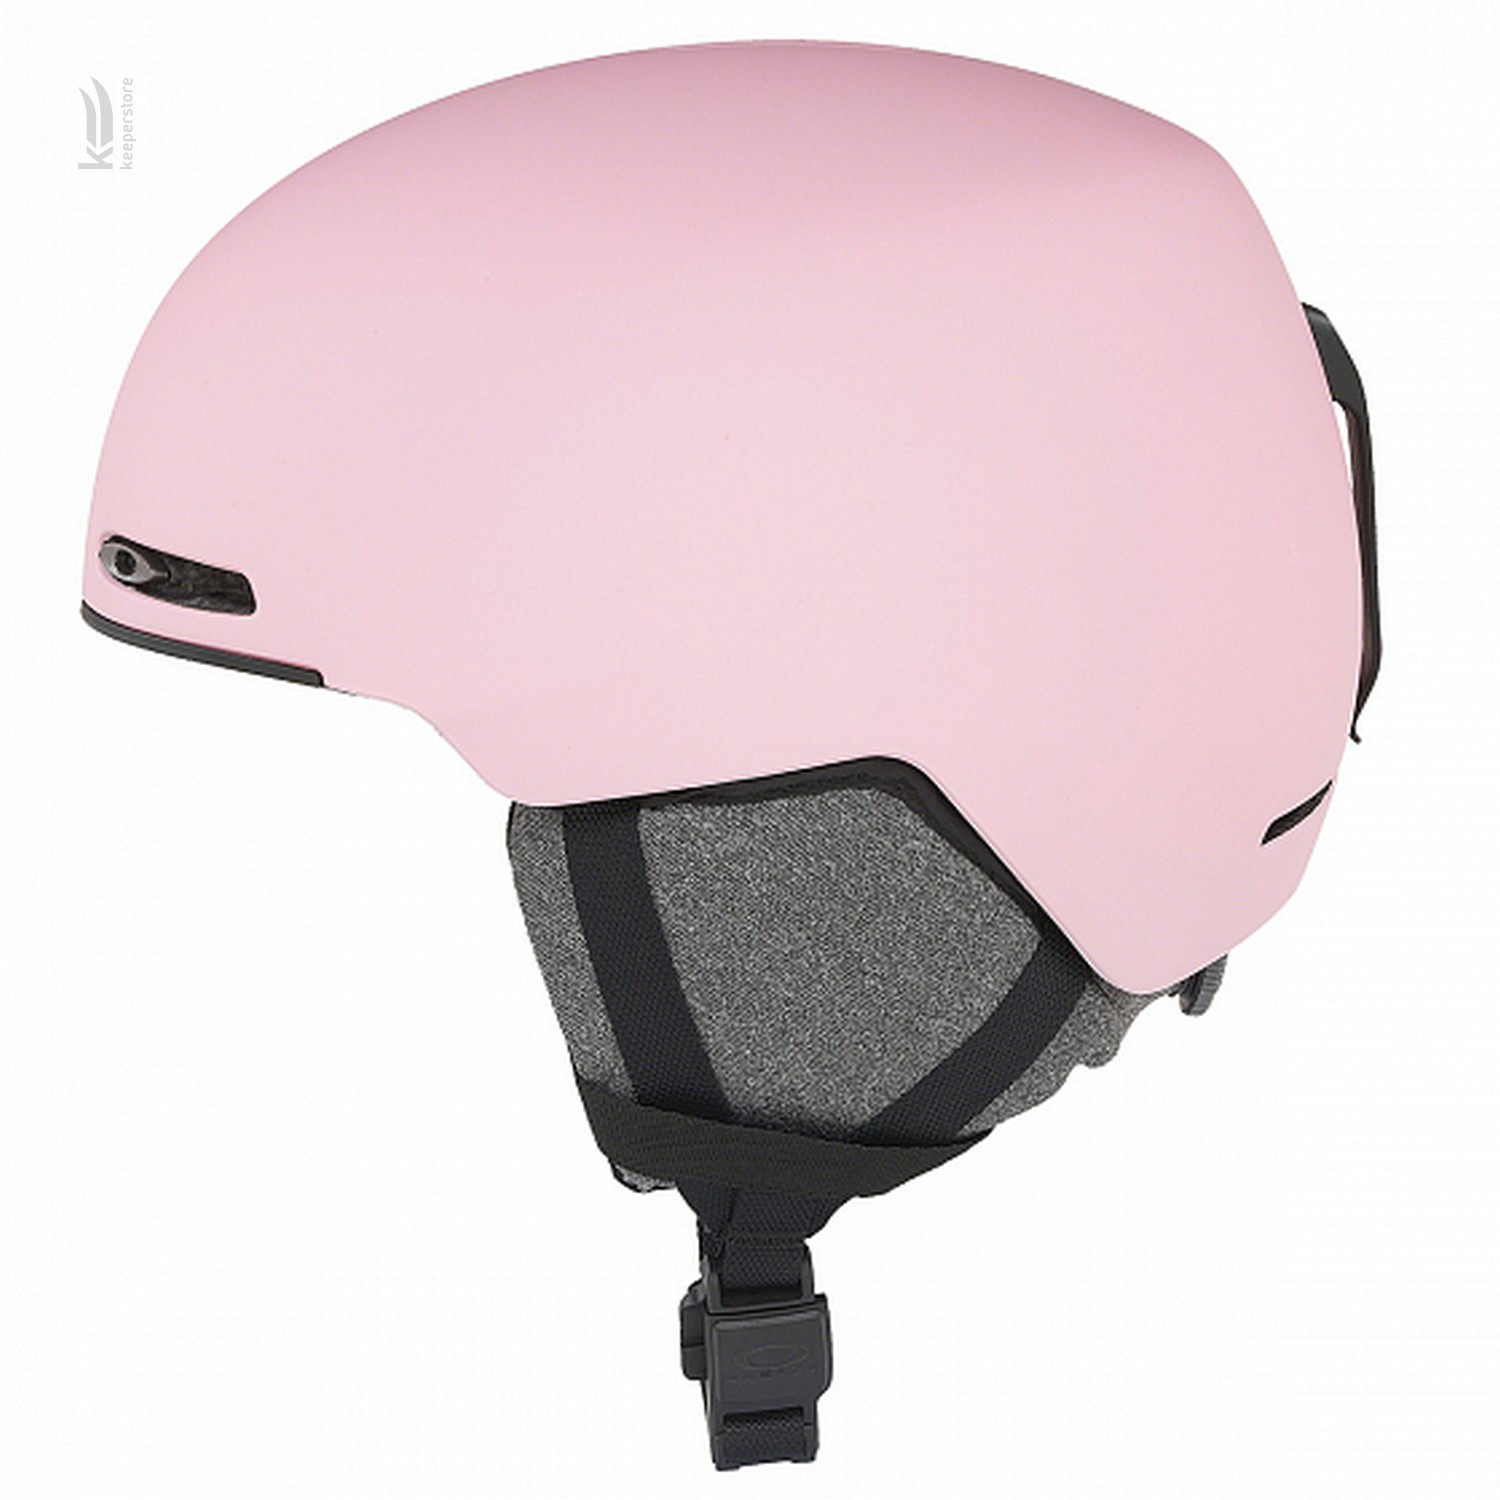 Цена шлем oakley для сноубординга Oakley Mod 1 Pale Pink 19/20 в Киеве